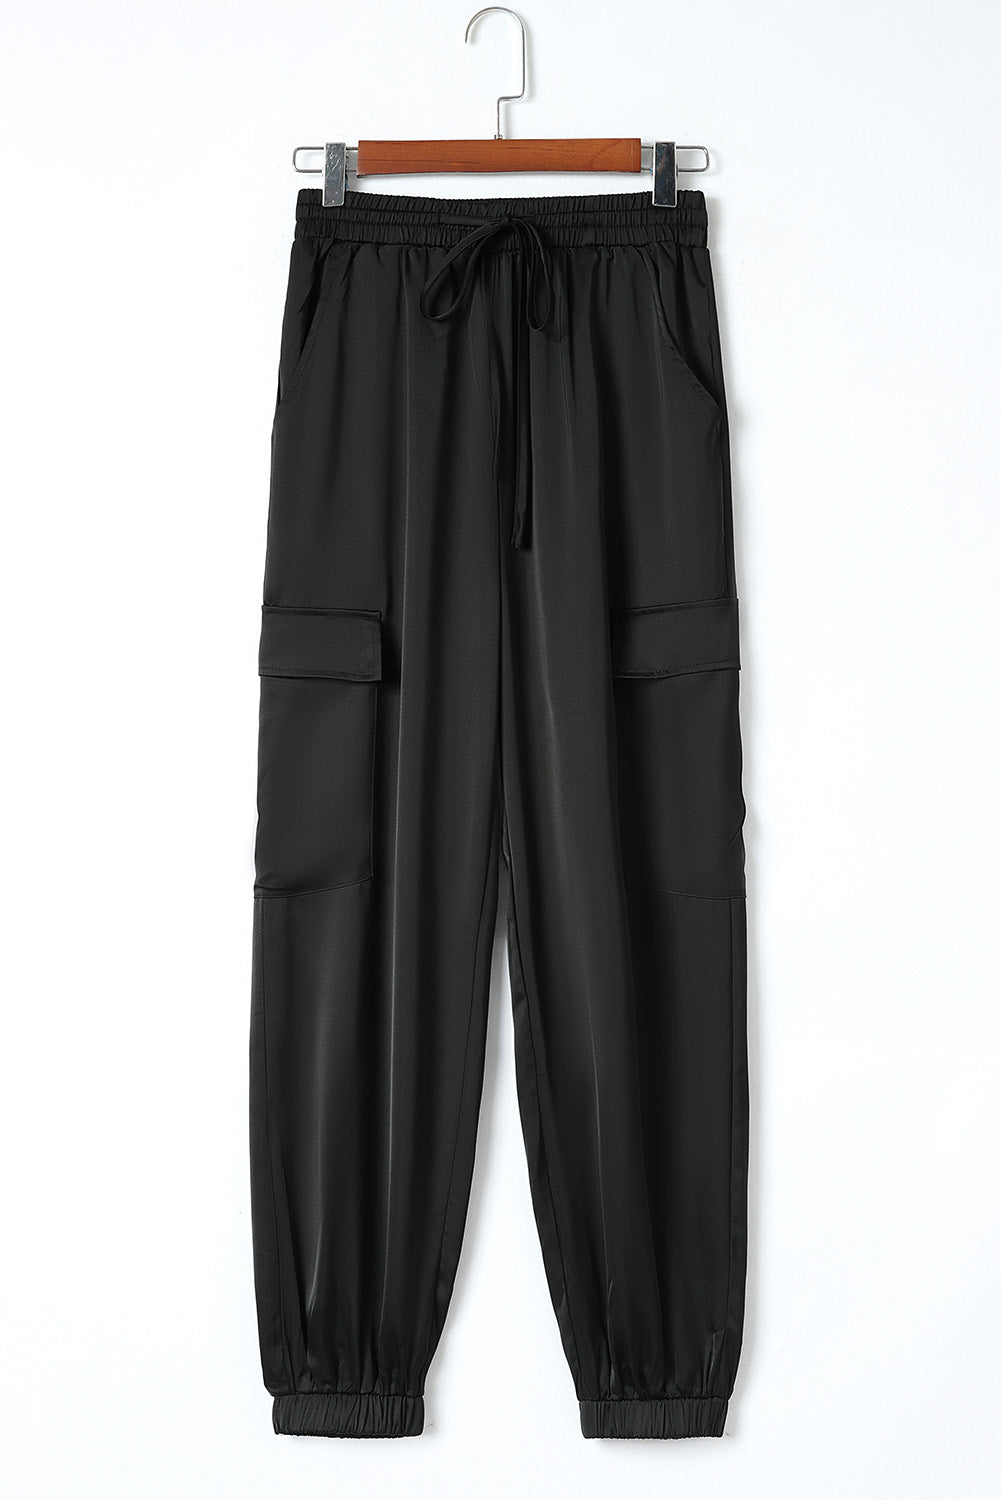 Black Satin Pocketed Drawstring Elastic Waist Pants MPJ0040